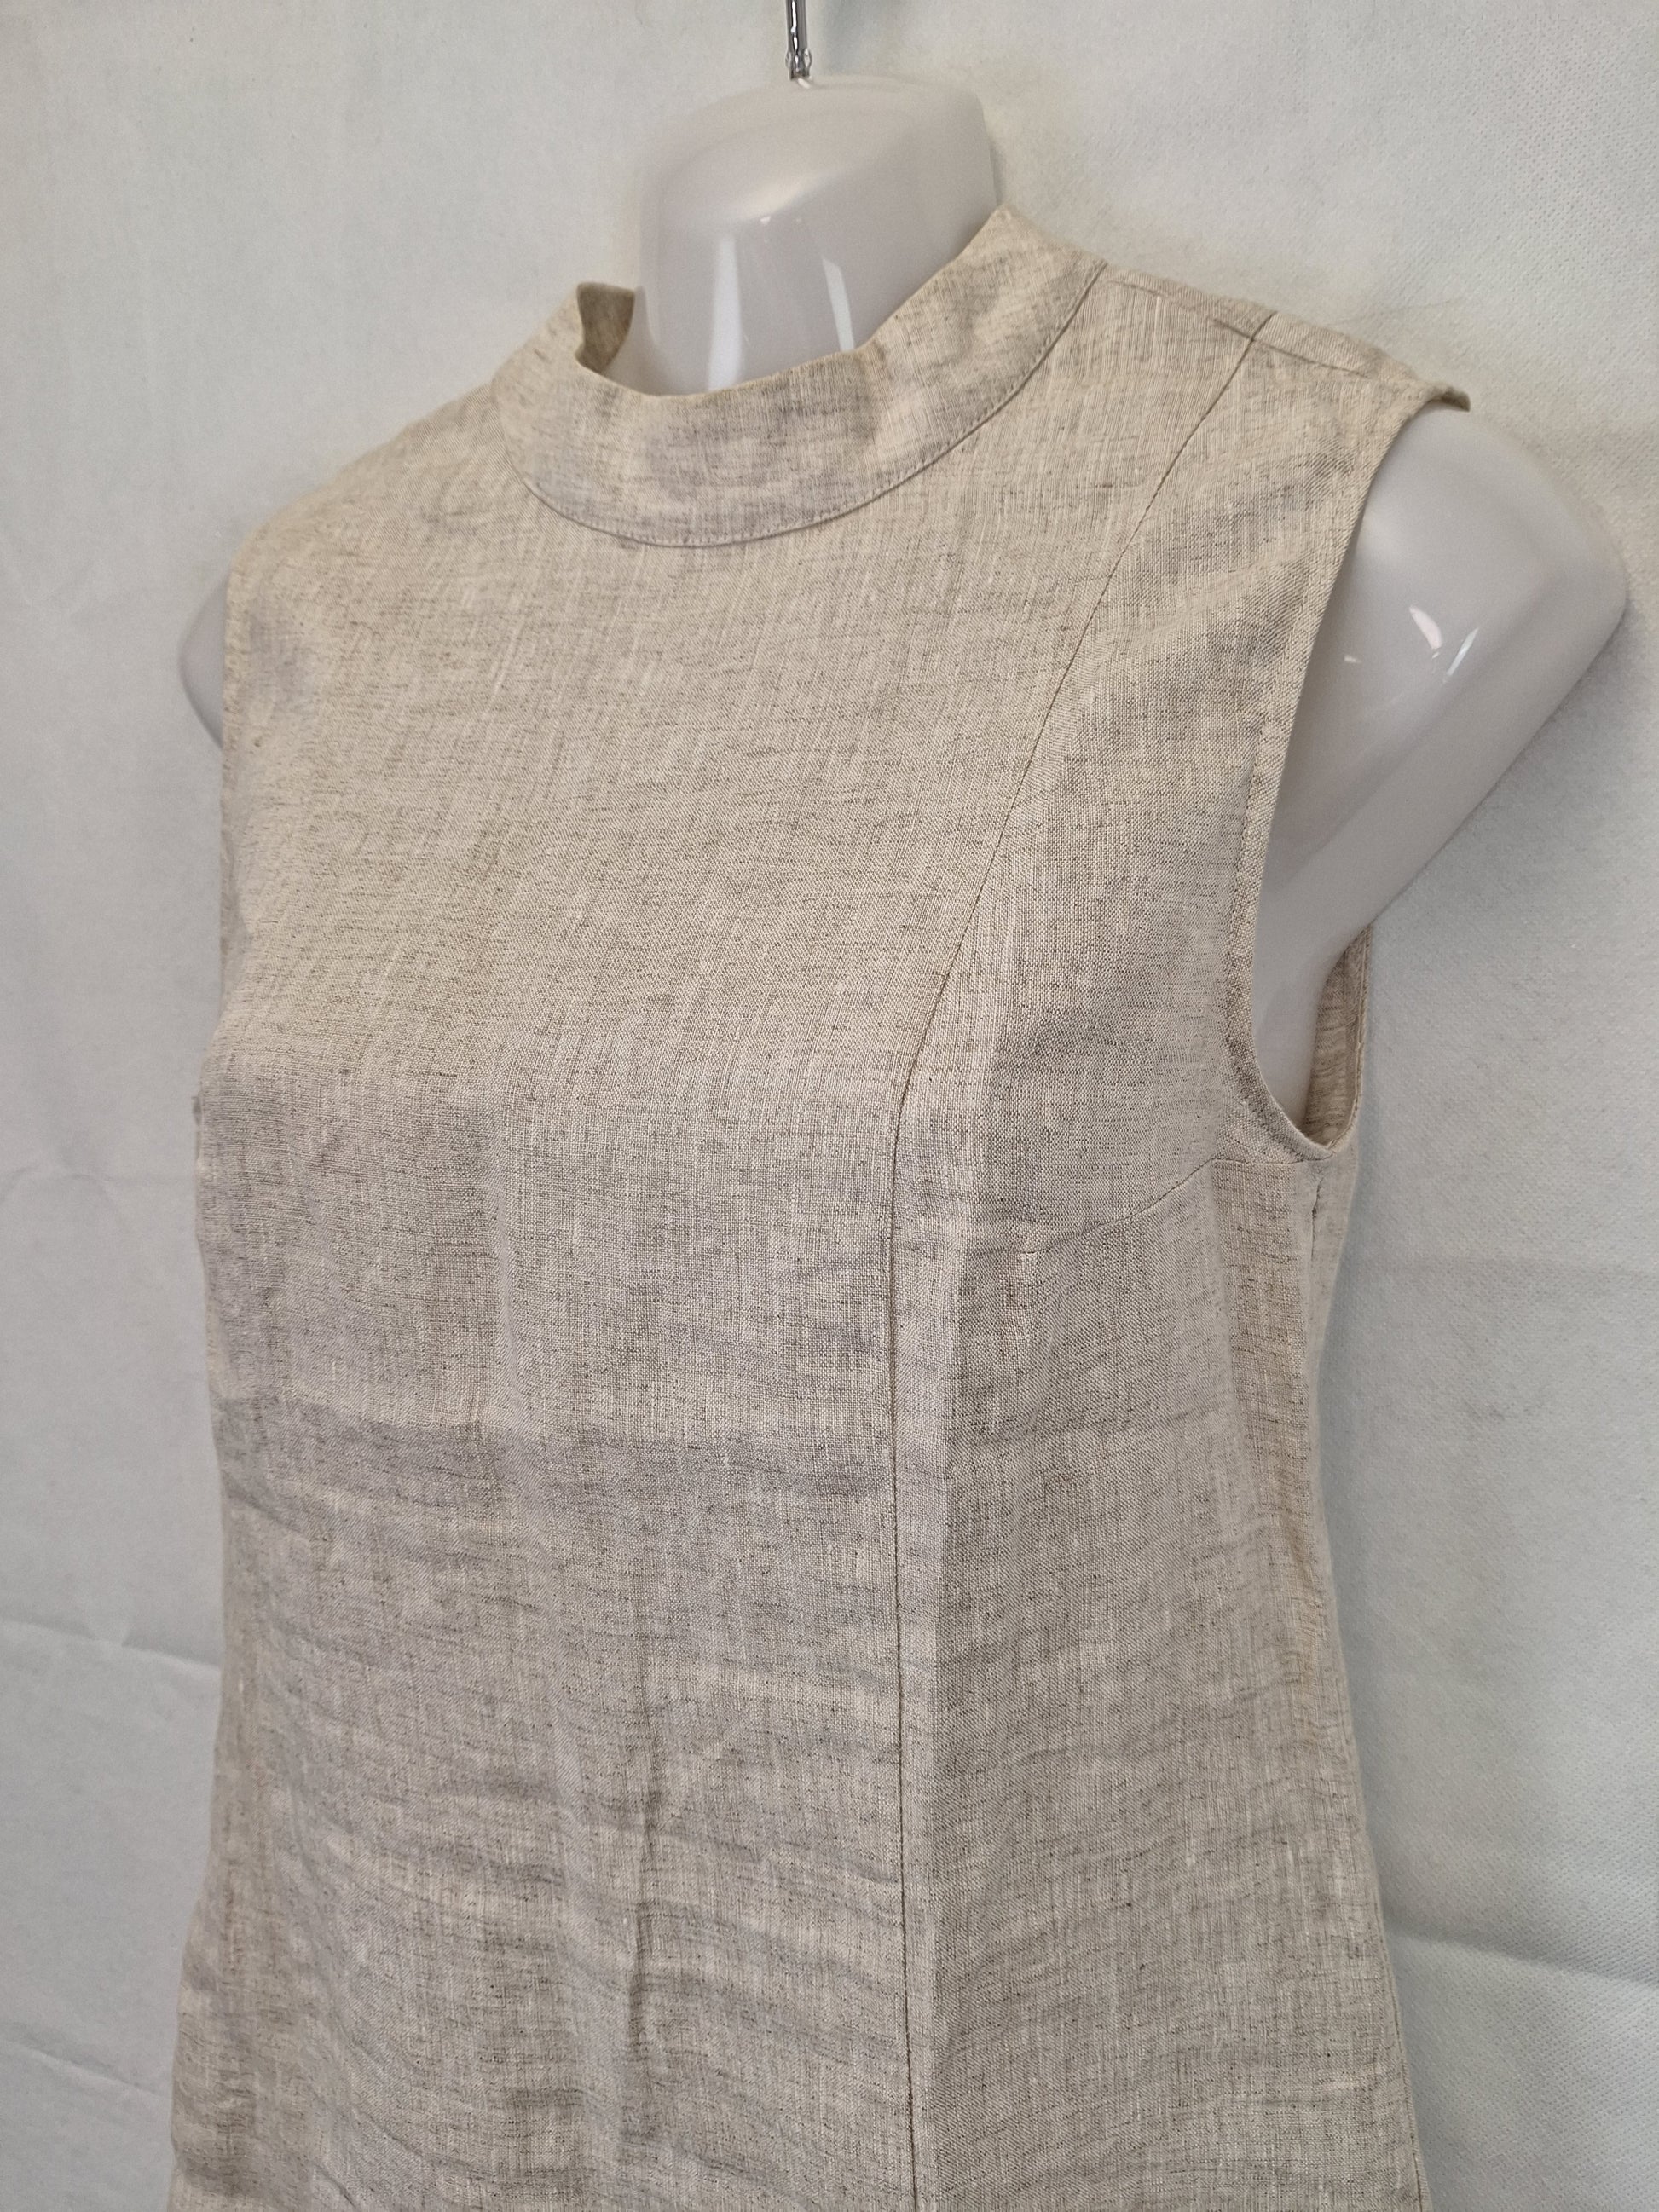 Sir Linen Summer Mini Dress Size 6 by SwapUp-Online Second Hand Store-Online Thrift Store